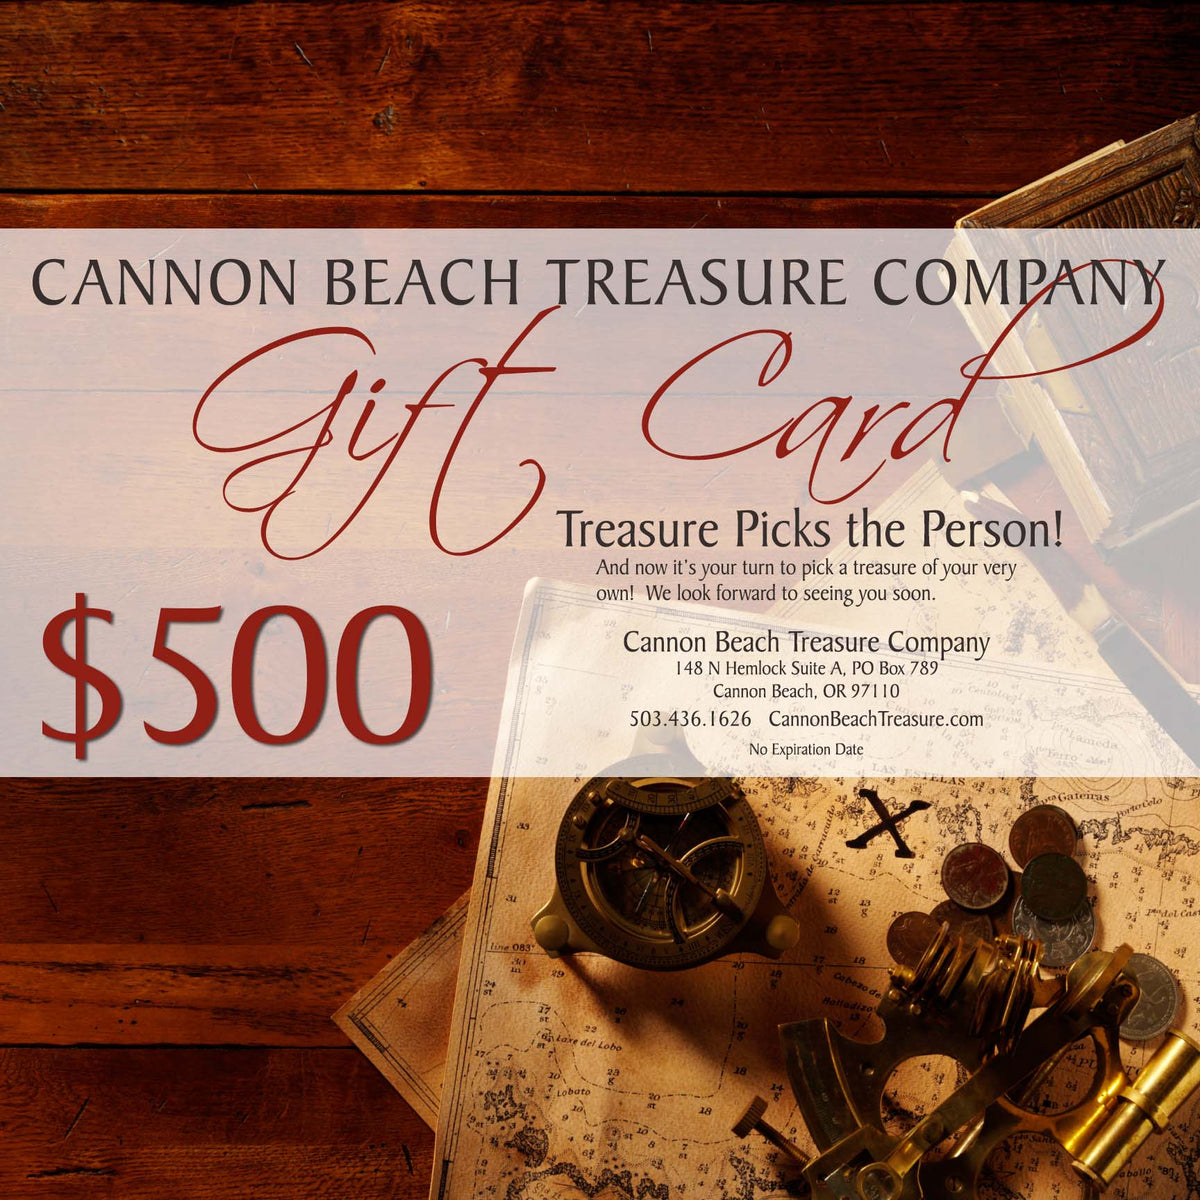 Cannon Beach Treasure Company Gift Card $500